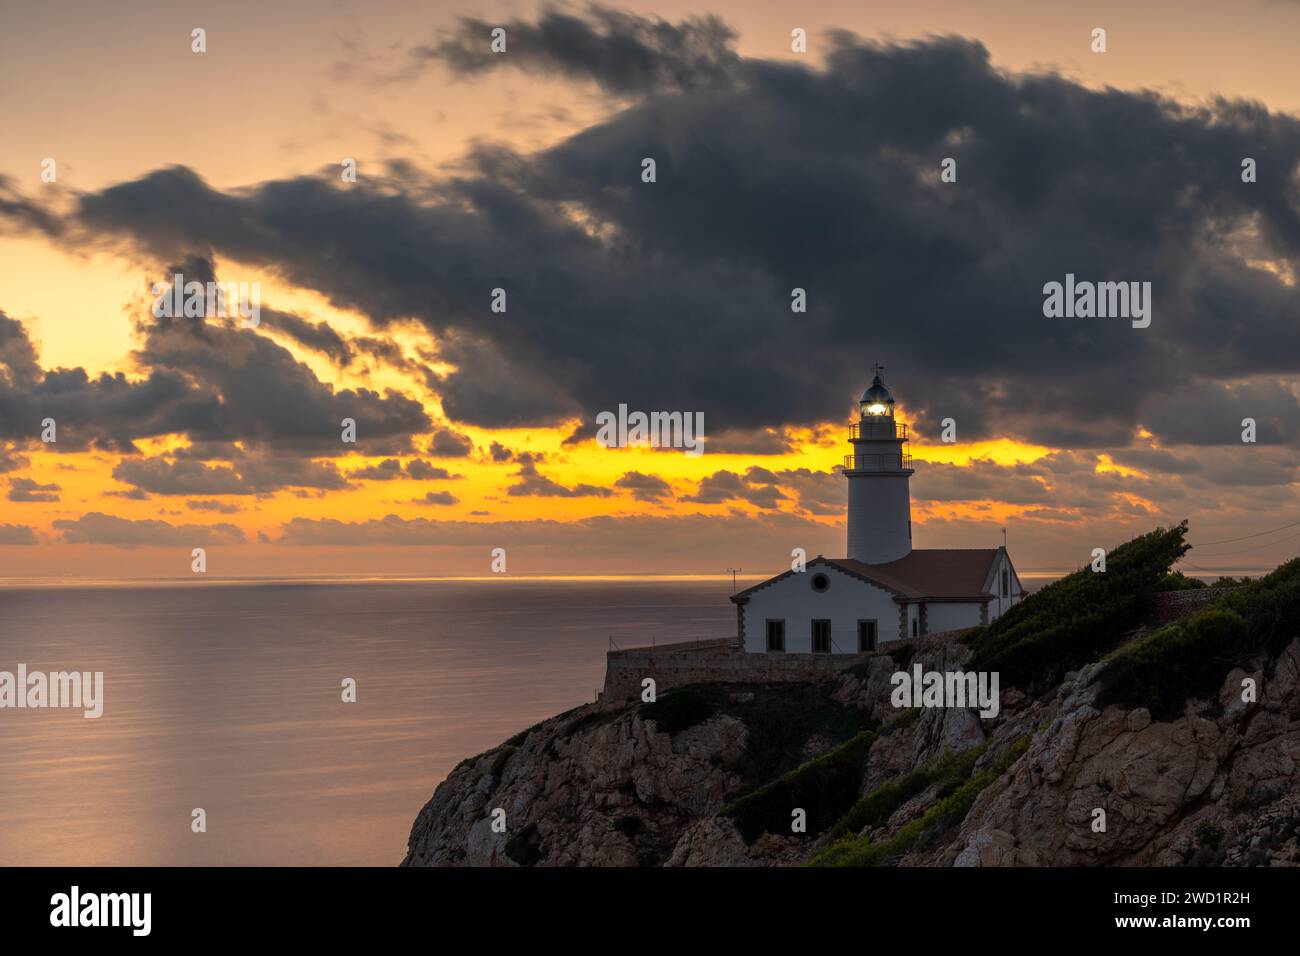 Dawn at Capdepera lighthouse near Cala Rajada, island of Mallorca, Spain Stock Photo